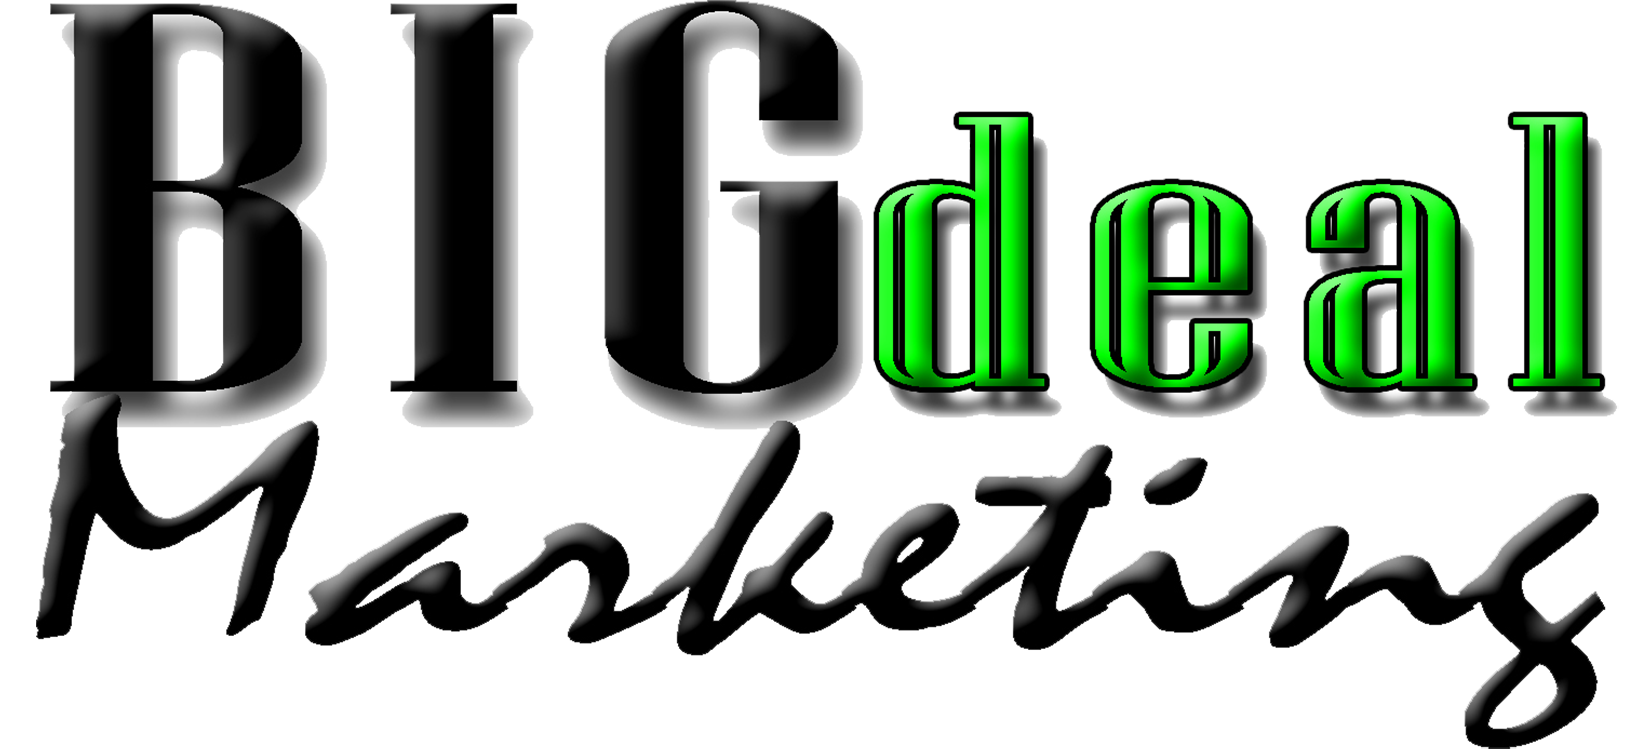 BIGdeal Marketing Logo